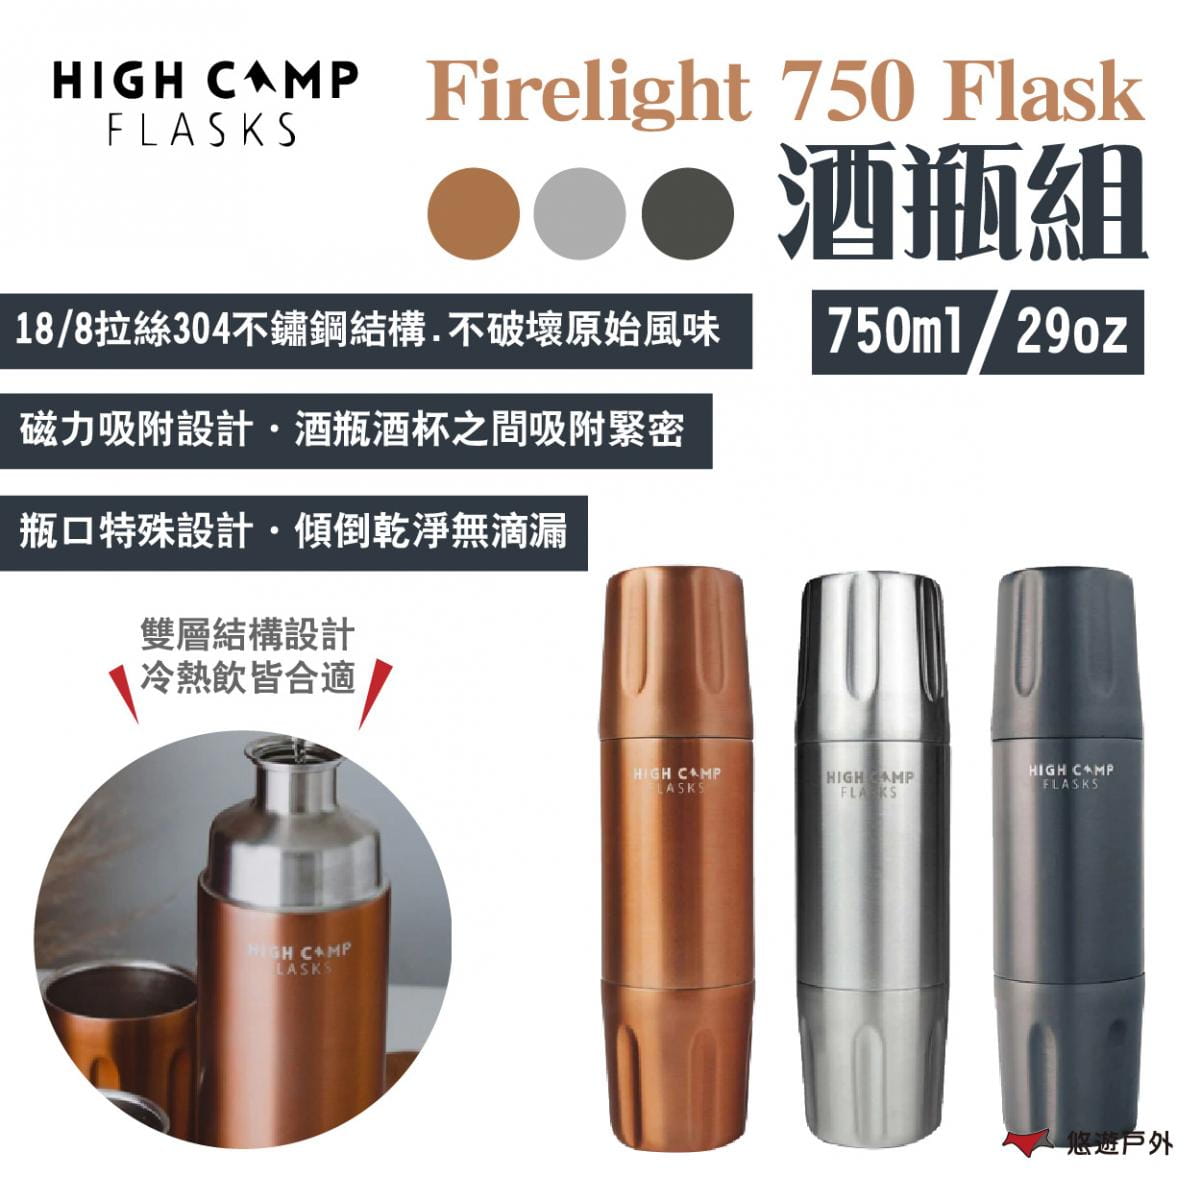 【HIGH CAMP】Firelight 750 Flask 酒瓶組_750ml (悠遊戶外) 0